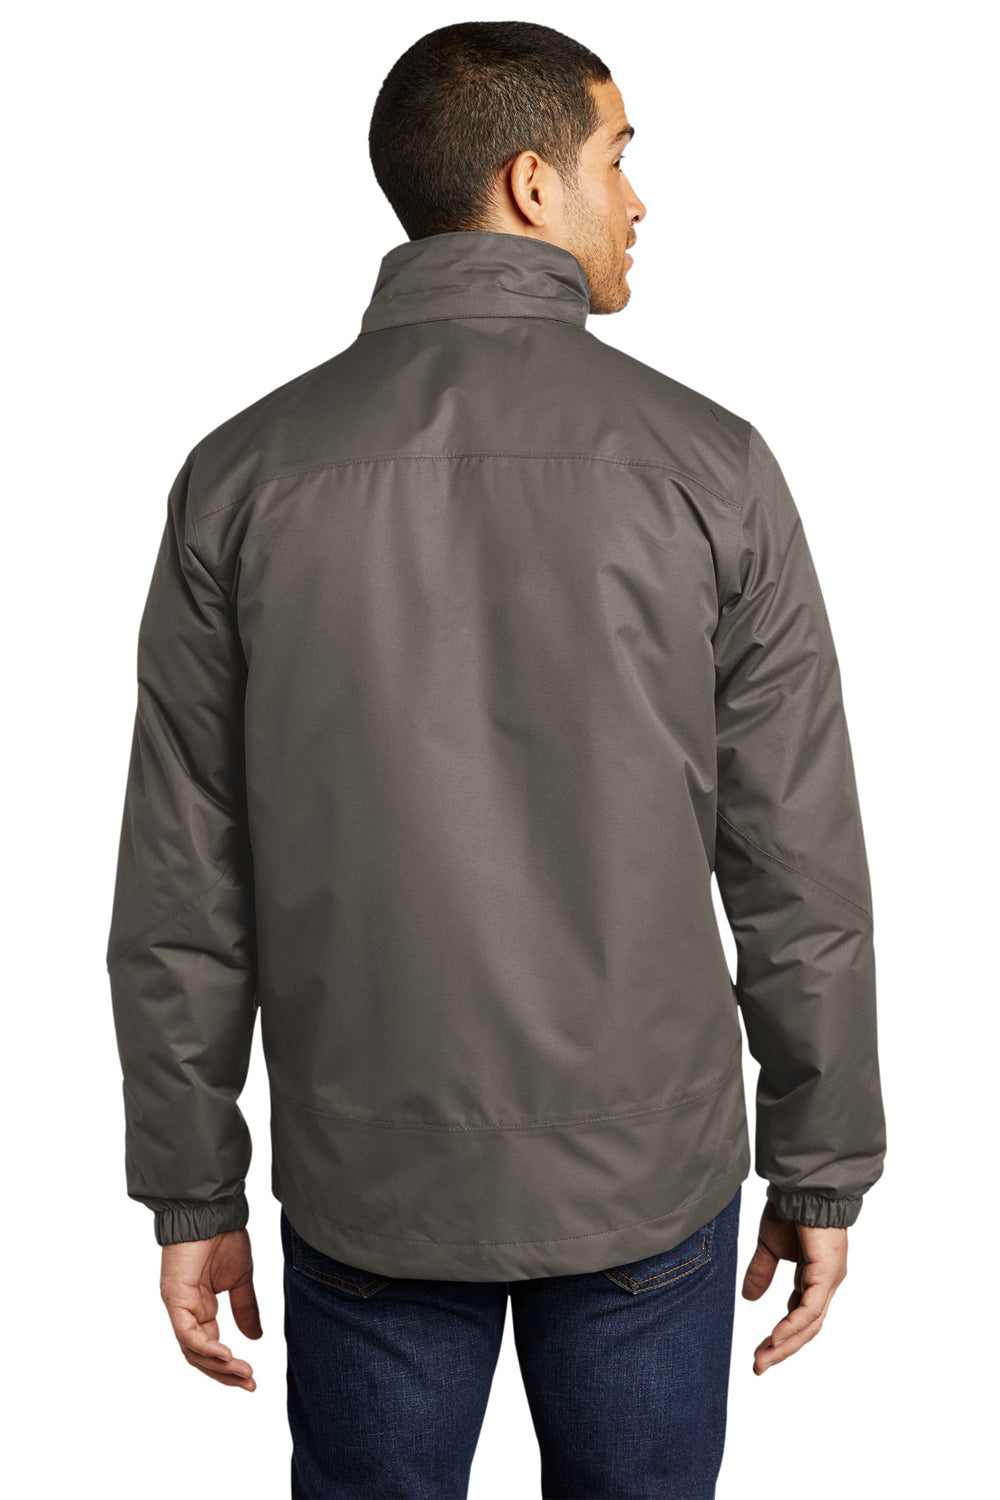 Port Authority J332 Mens Vortex 3-in-1 Waterproof Full Zip Hooded Jacket Deep Smoke Grey/Charcoal Grey Back